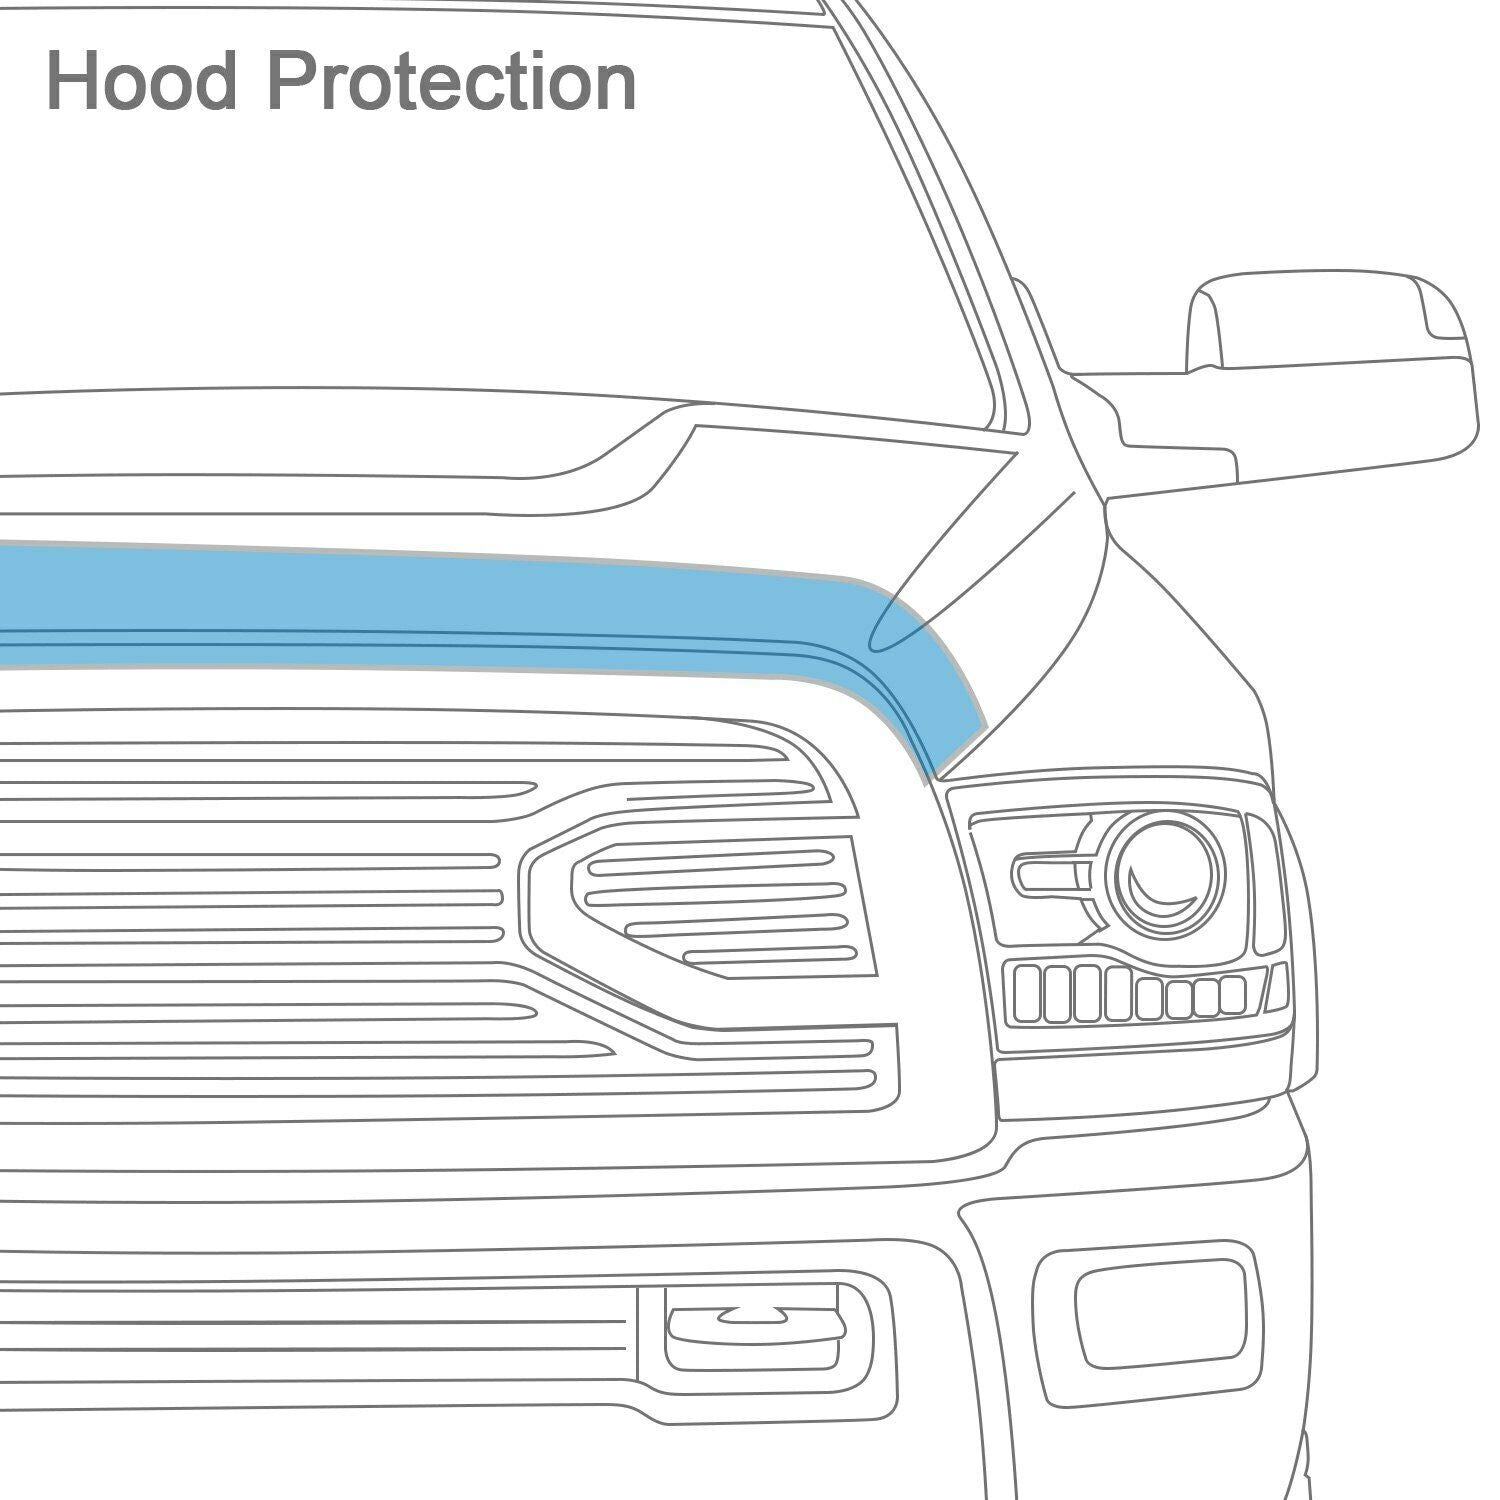 AVS Hoodflector Protector Shield For 02-06 Chevy Avalanche 03-04 Silverado 21417